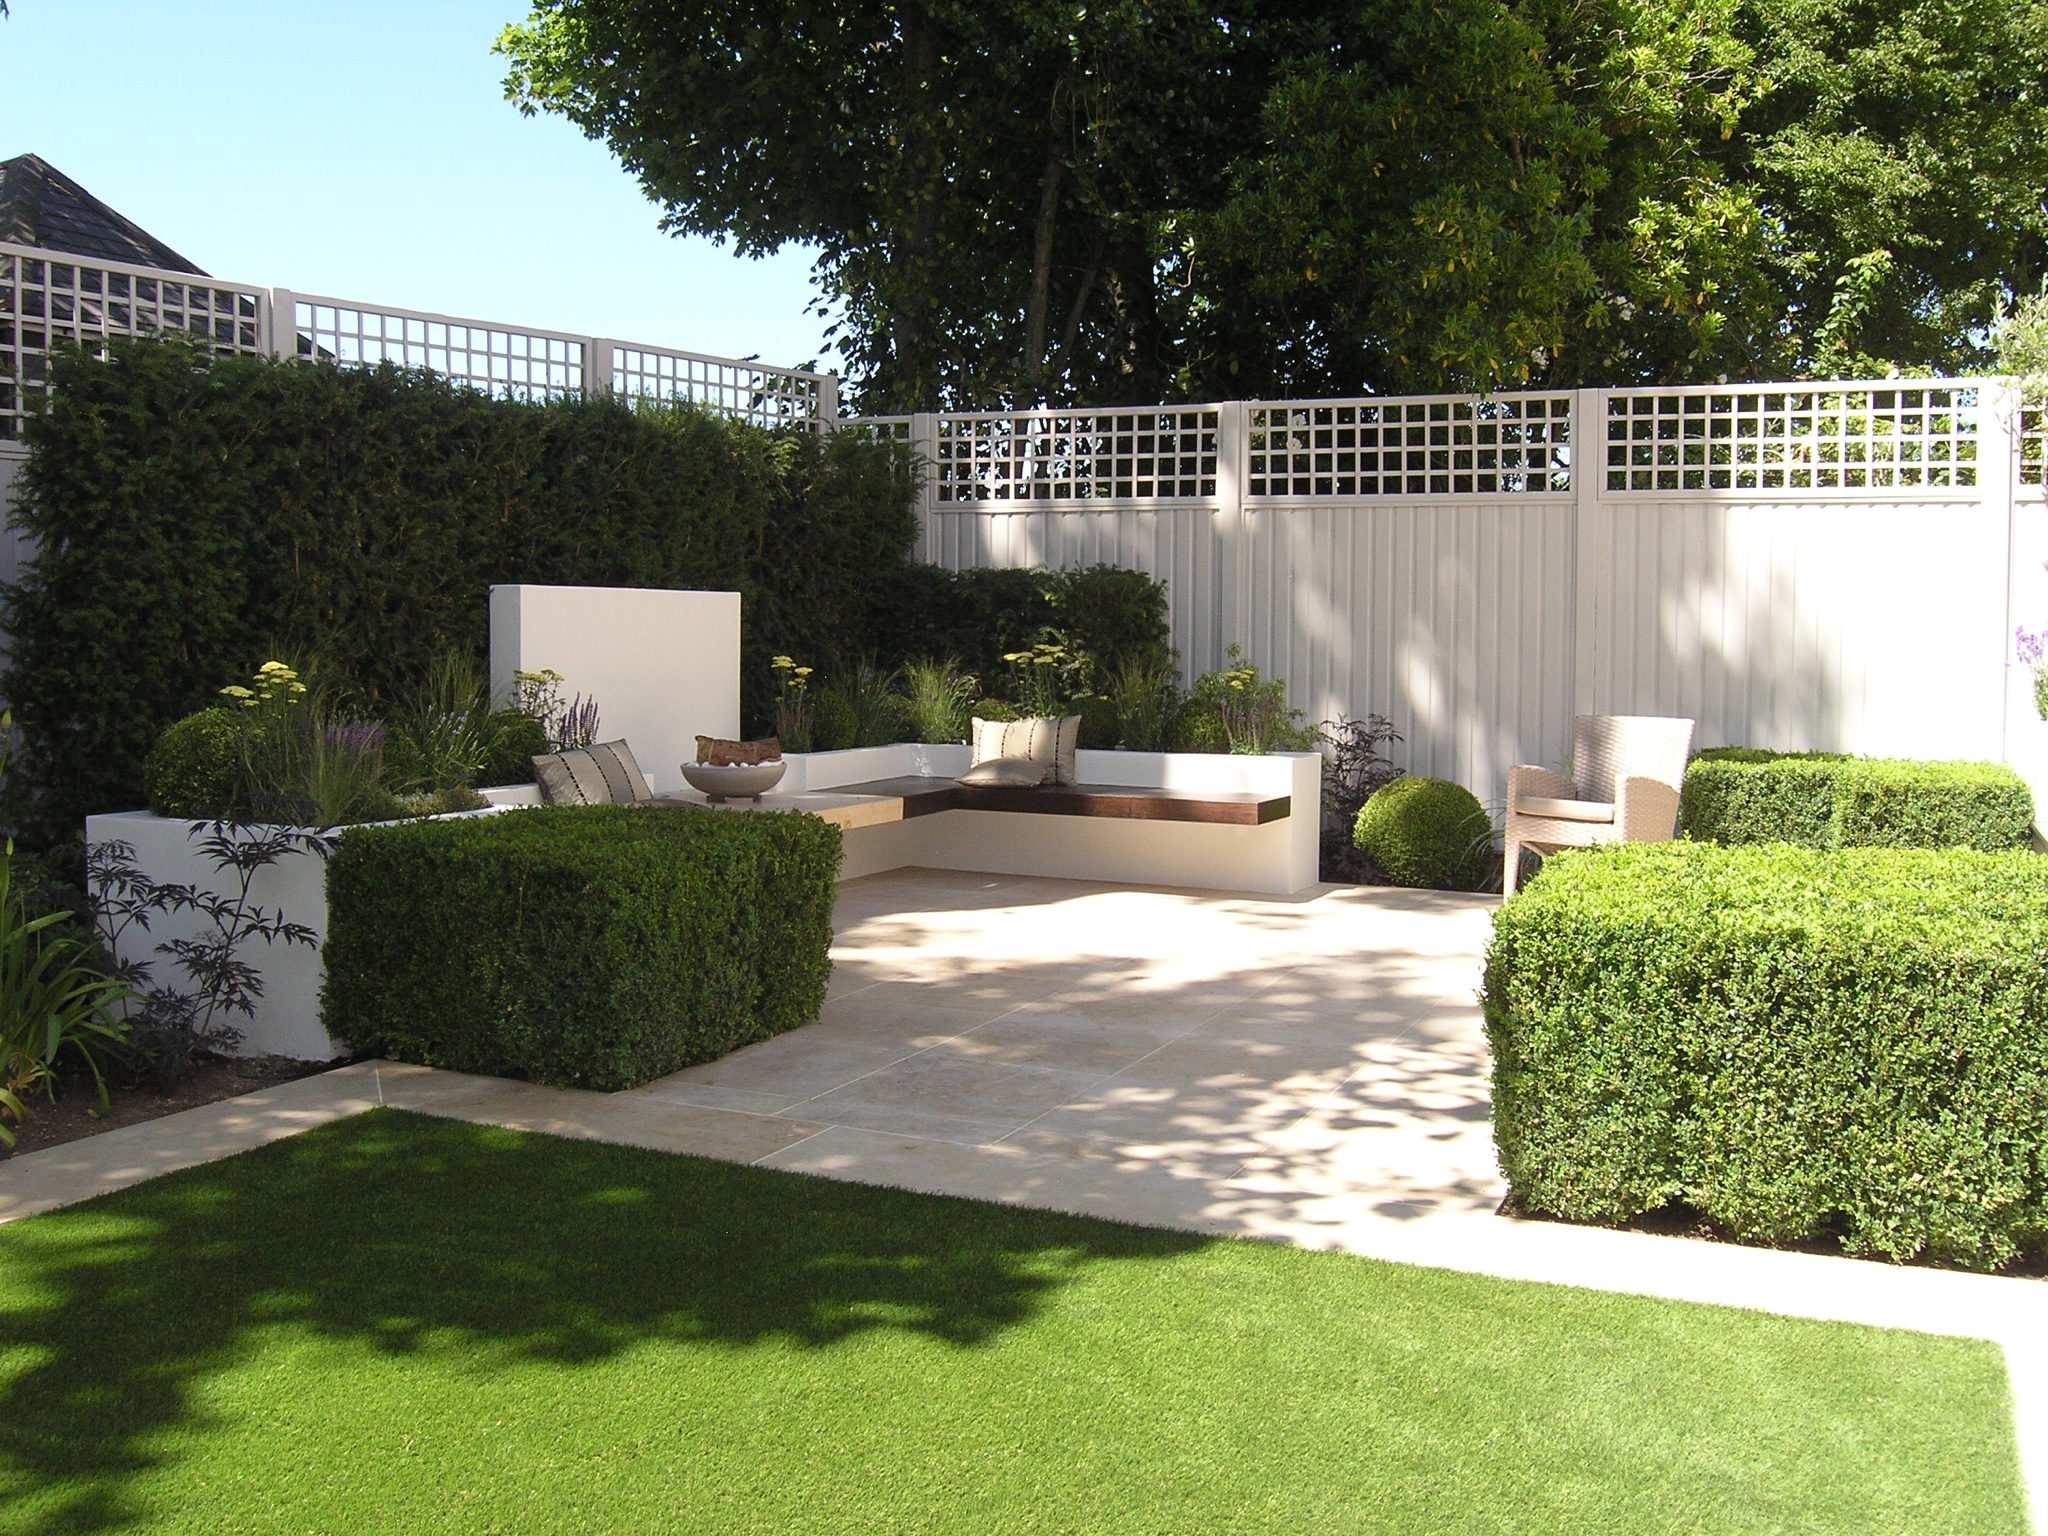 London landscape gardeners created modern patio area in Highgate Village